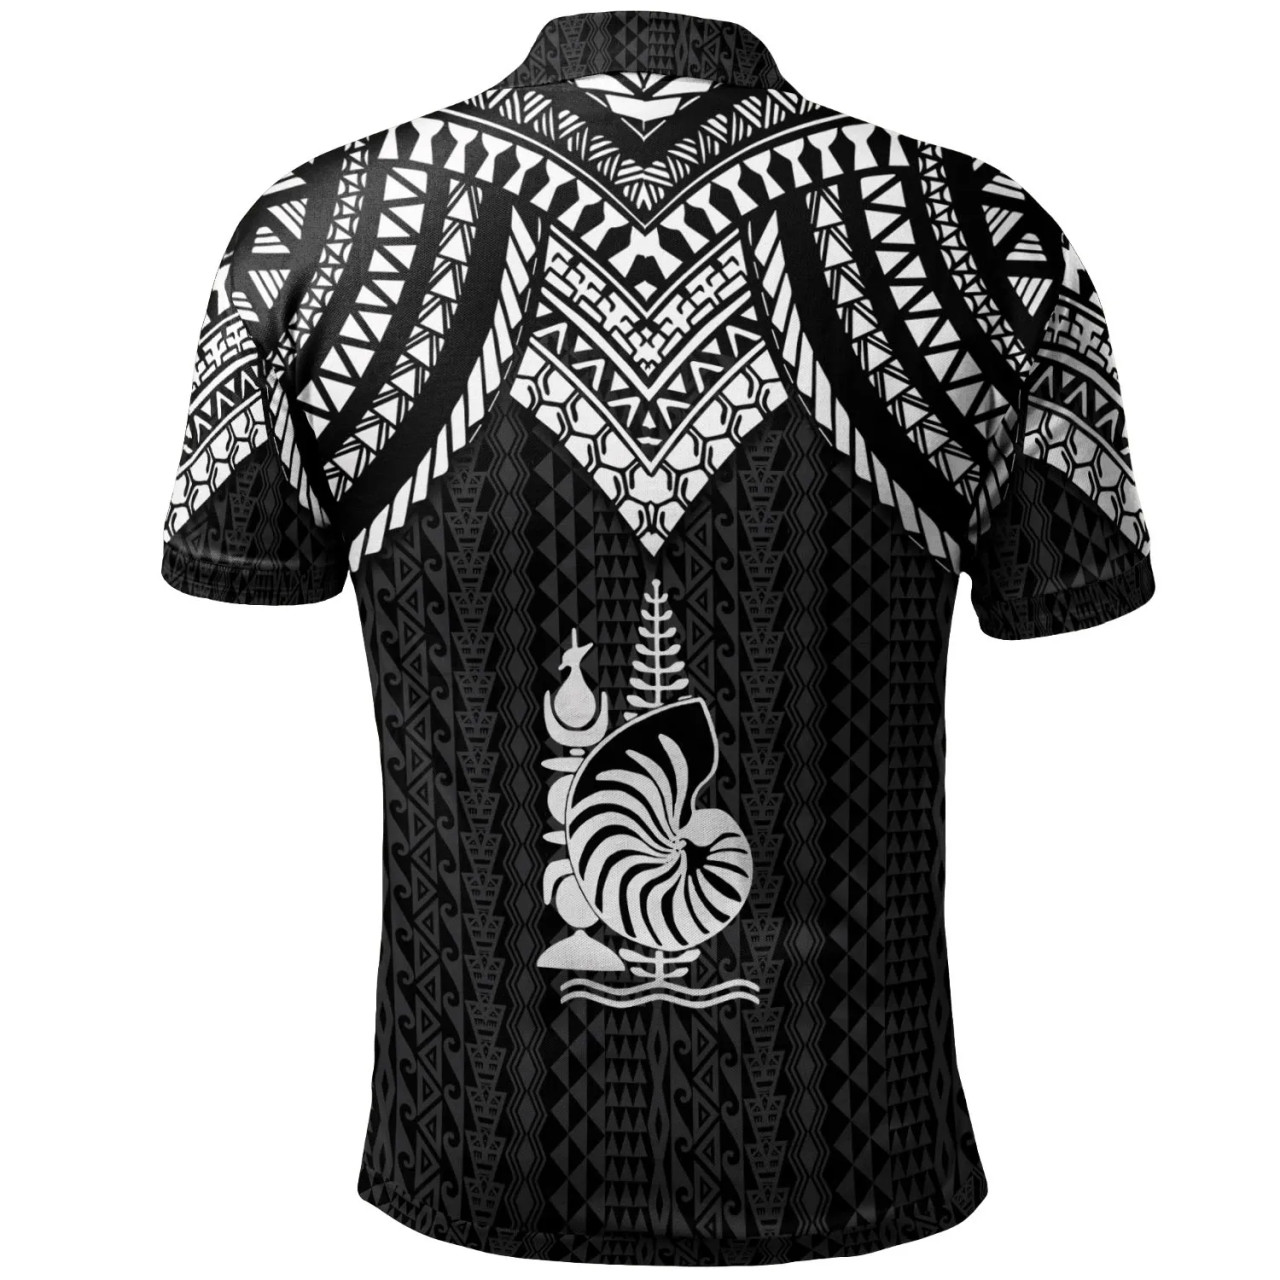 New Caledonia Polo Shirt - Polynesian Armor Style Black 2